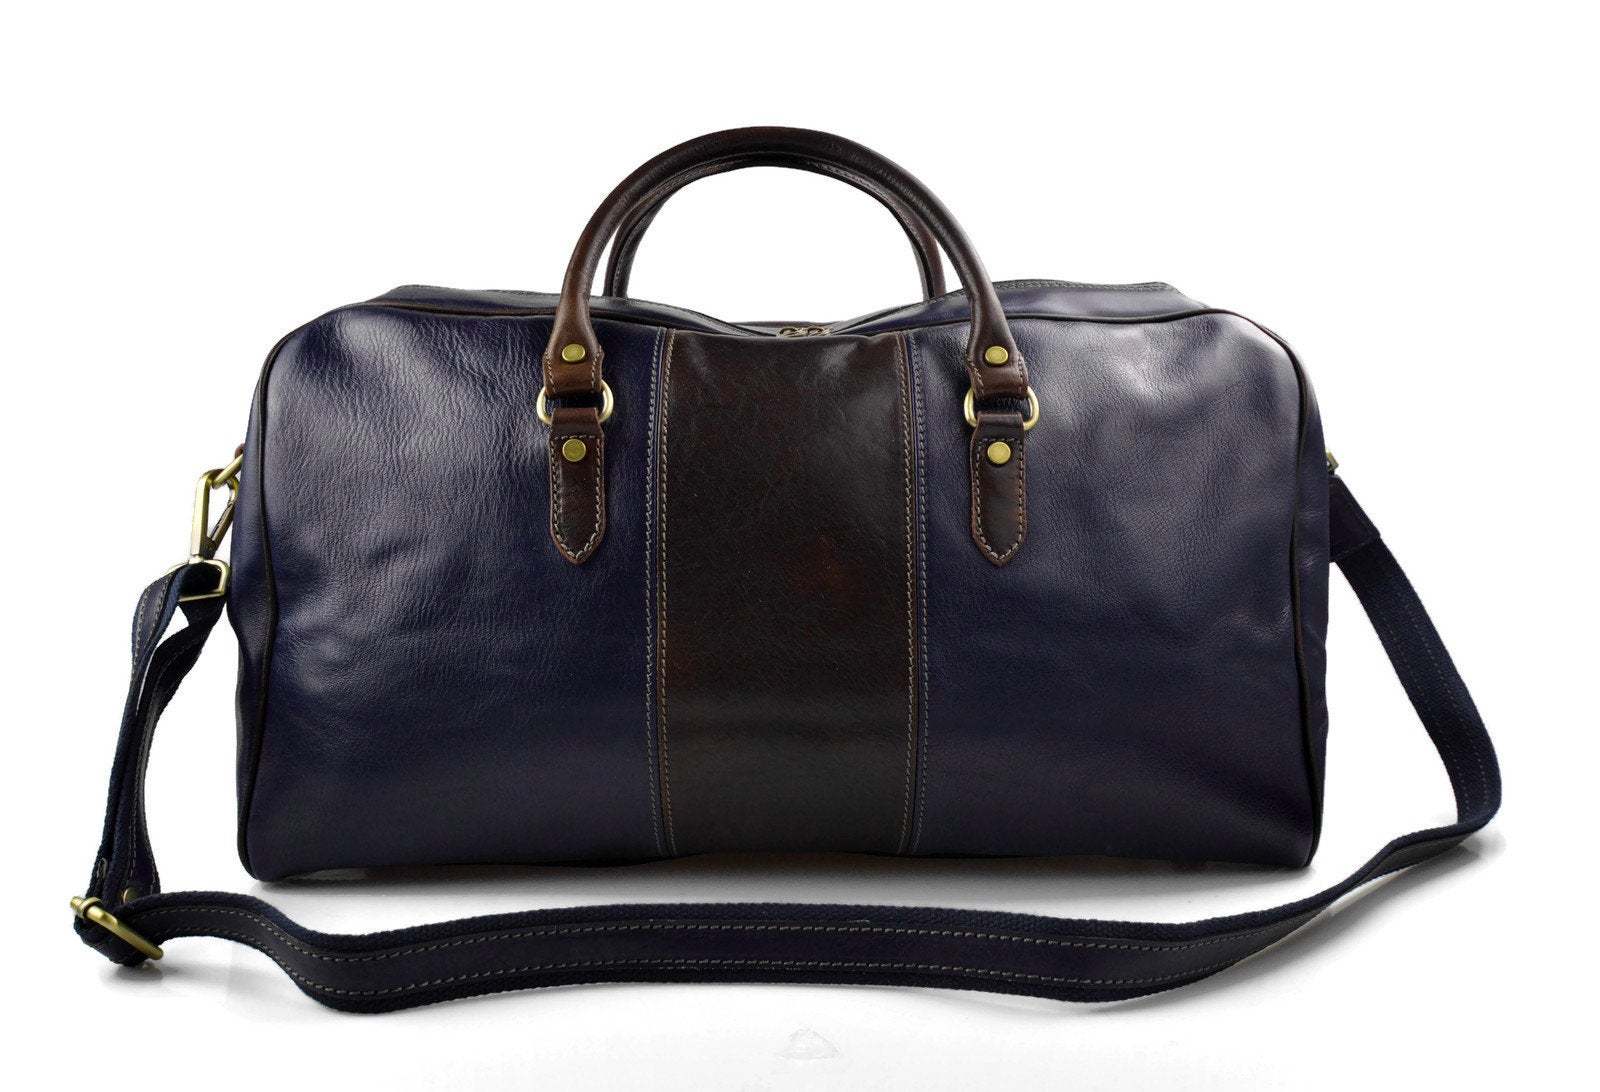 Duffle bag genuine leather shoulder bag blue - dark brown men women travel bag - Bags